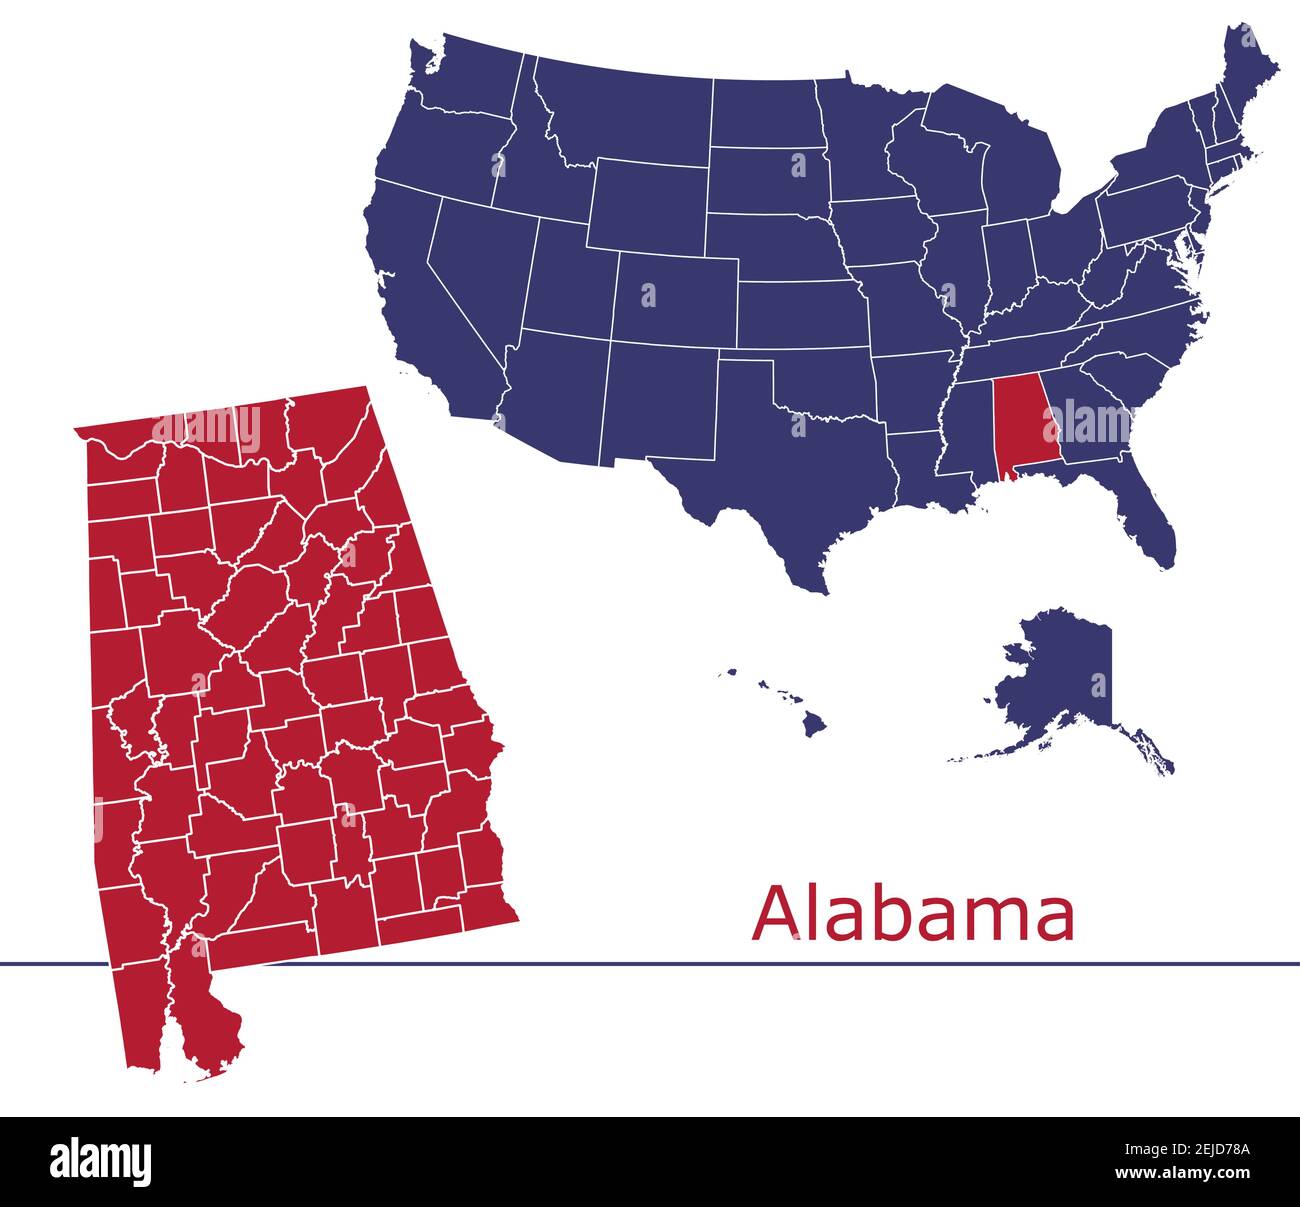 Alabama Grafschaften Vektor-Karte Umriss mit USA Kartenfarben national Alarmmeldung Stock Vektor